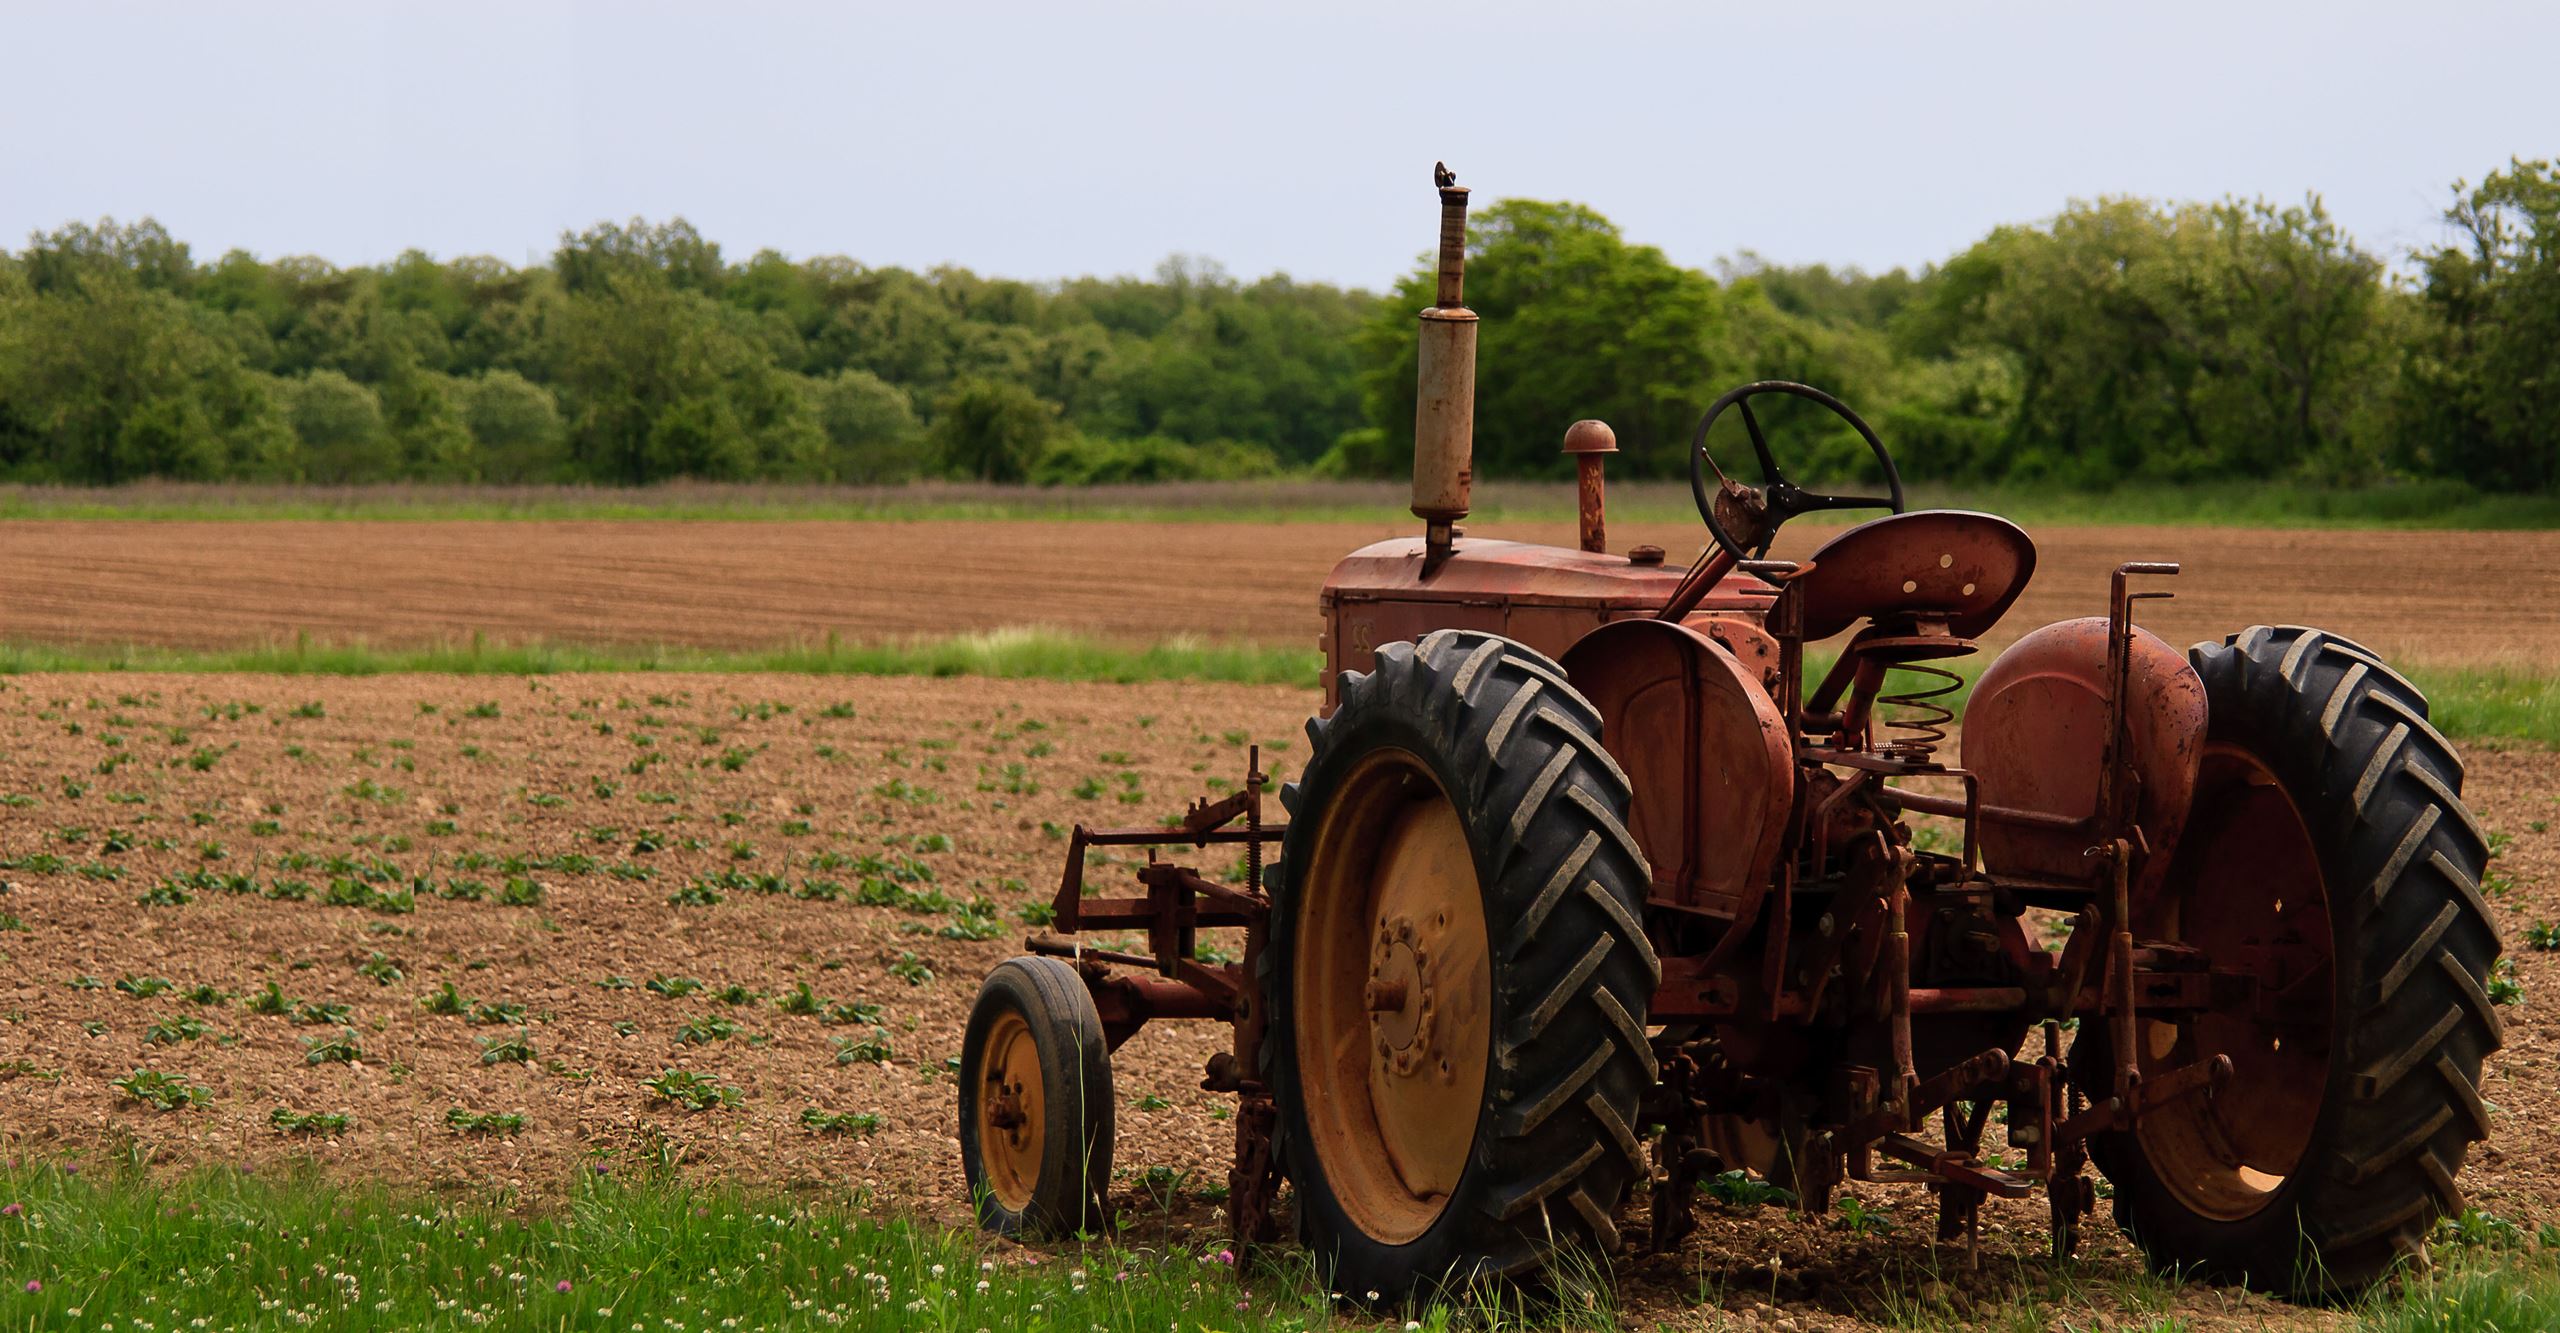 Rustic tractor in field